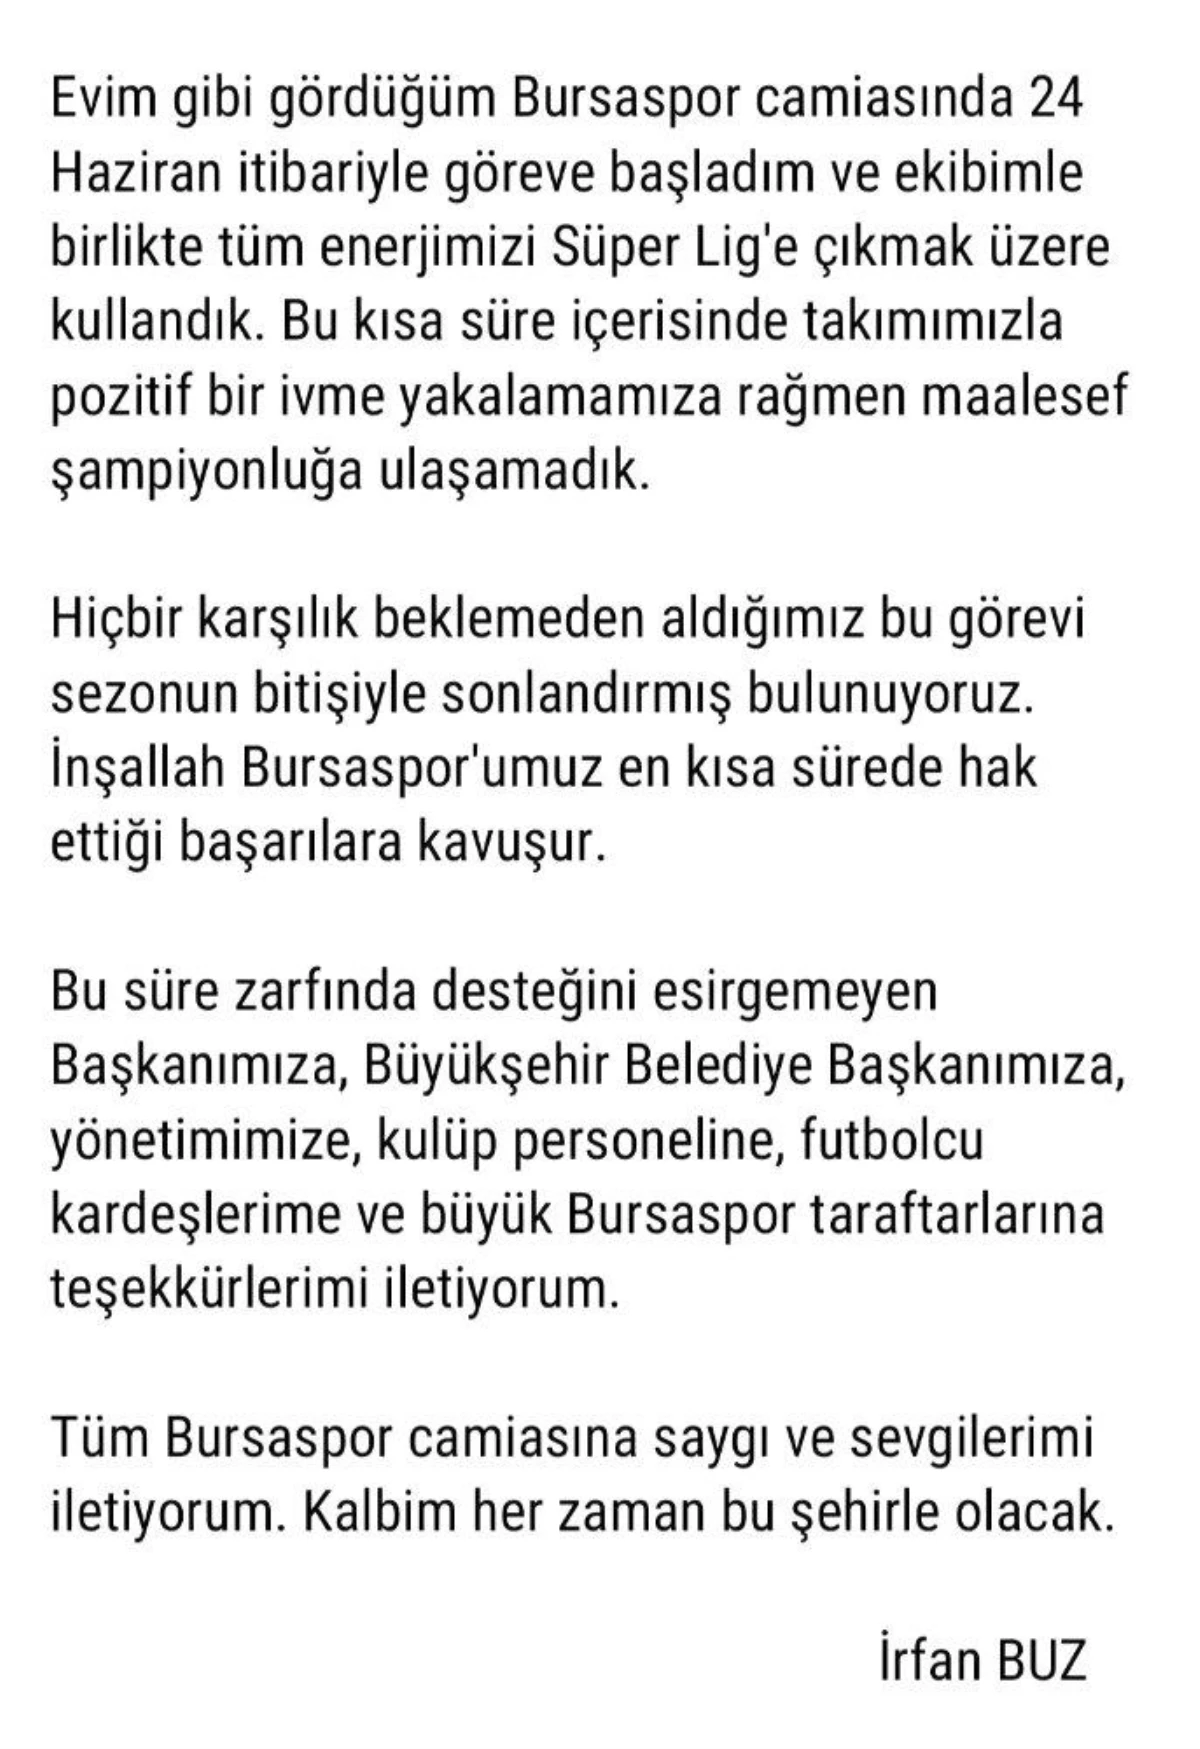 Son dakika haberi | İrfan Buz\'dan Bursaspor\'a veda mesajı